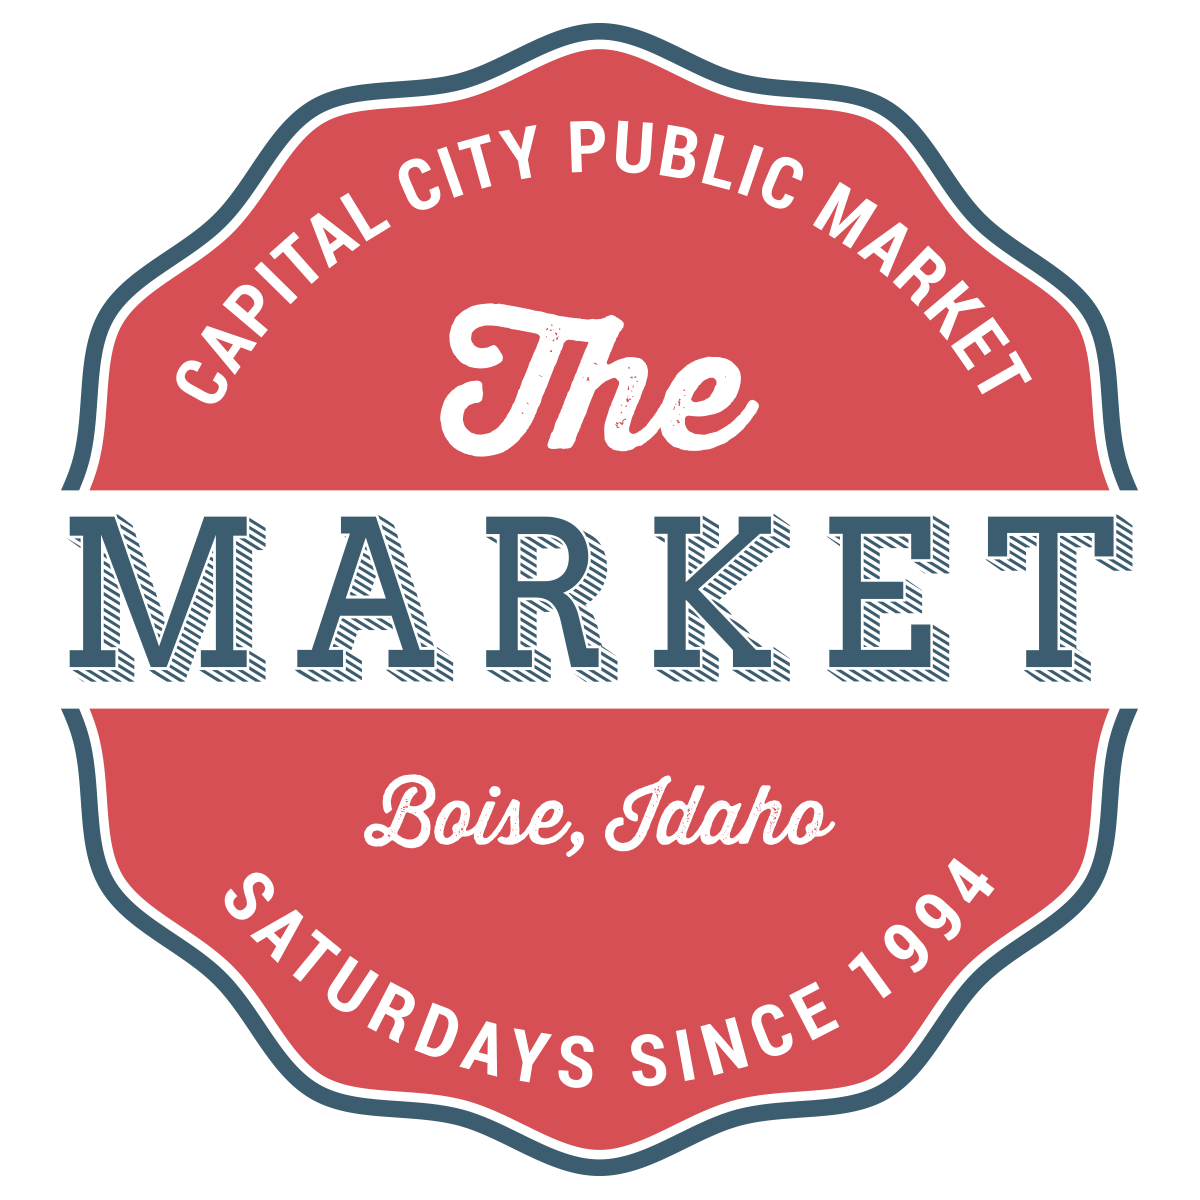 Capital City Public Market